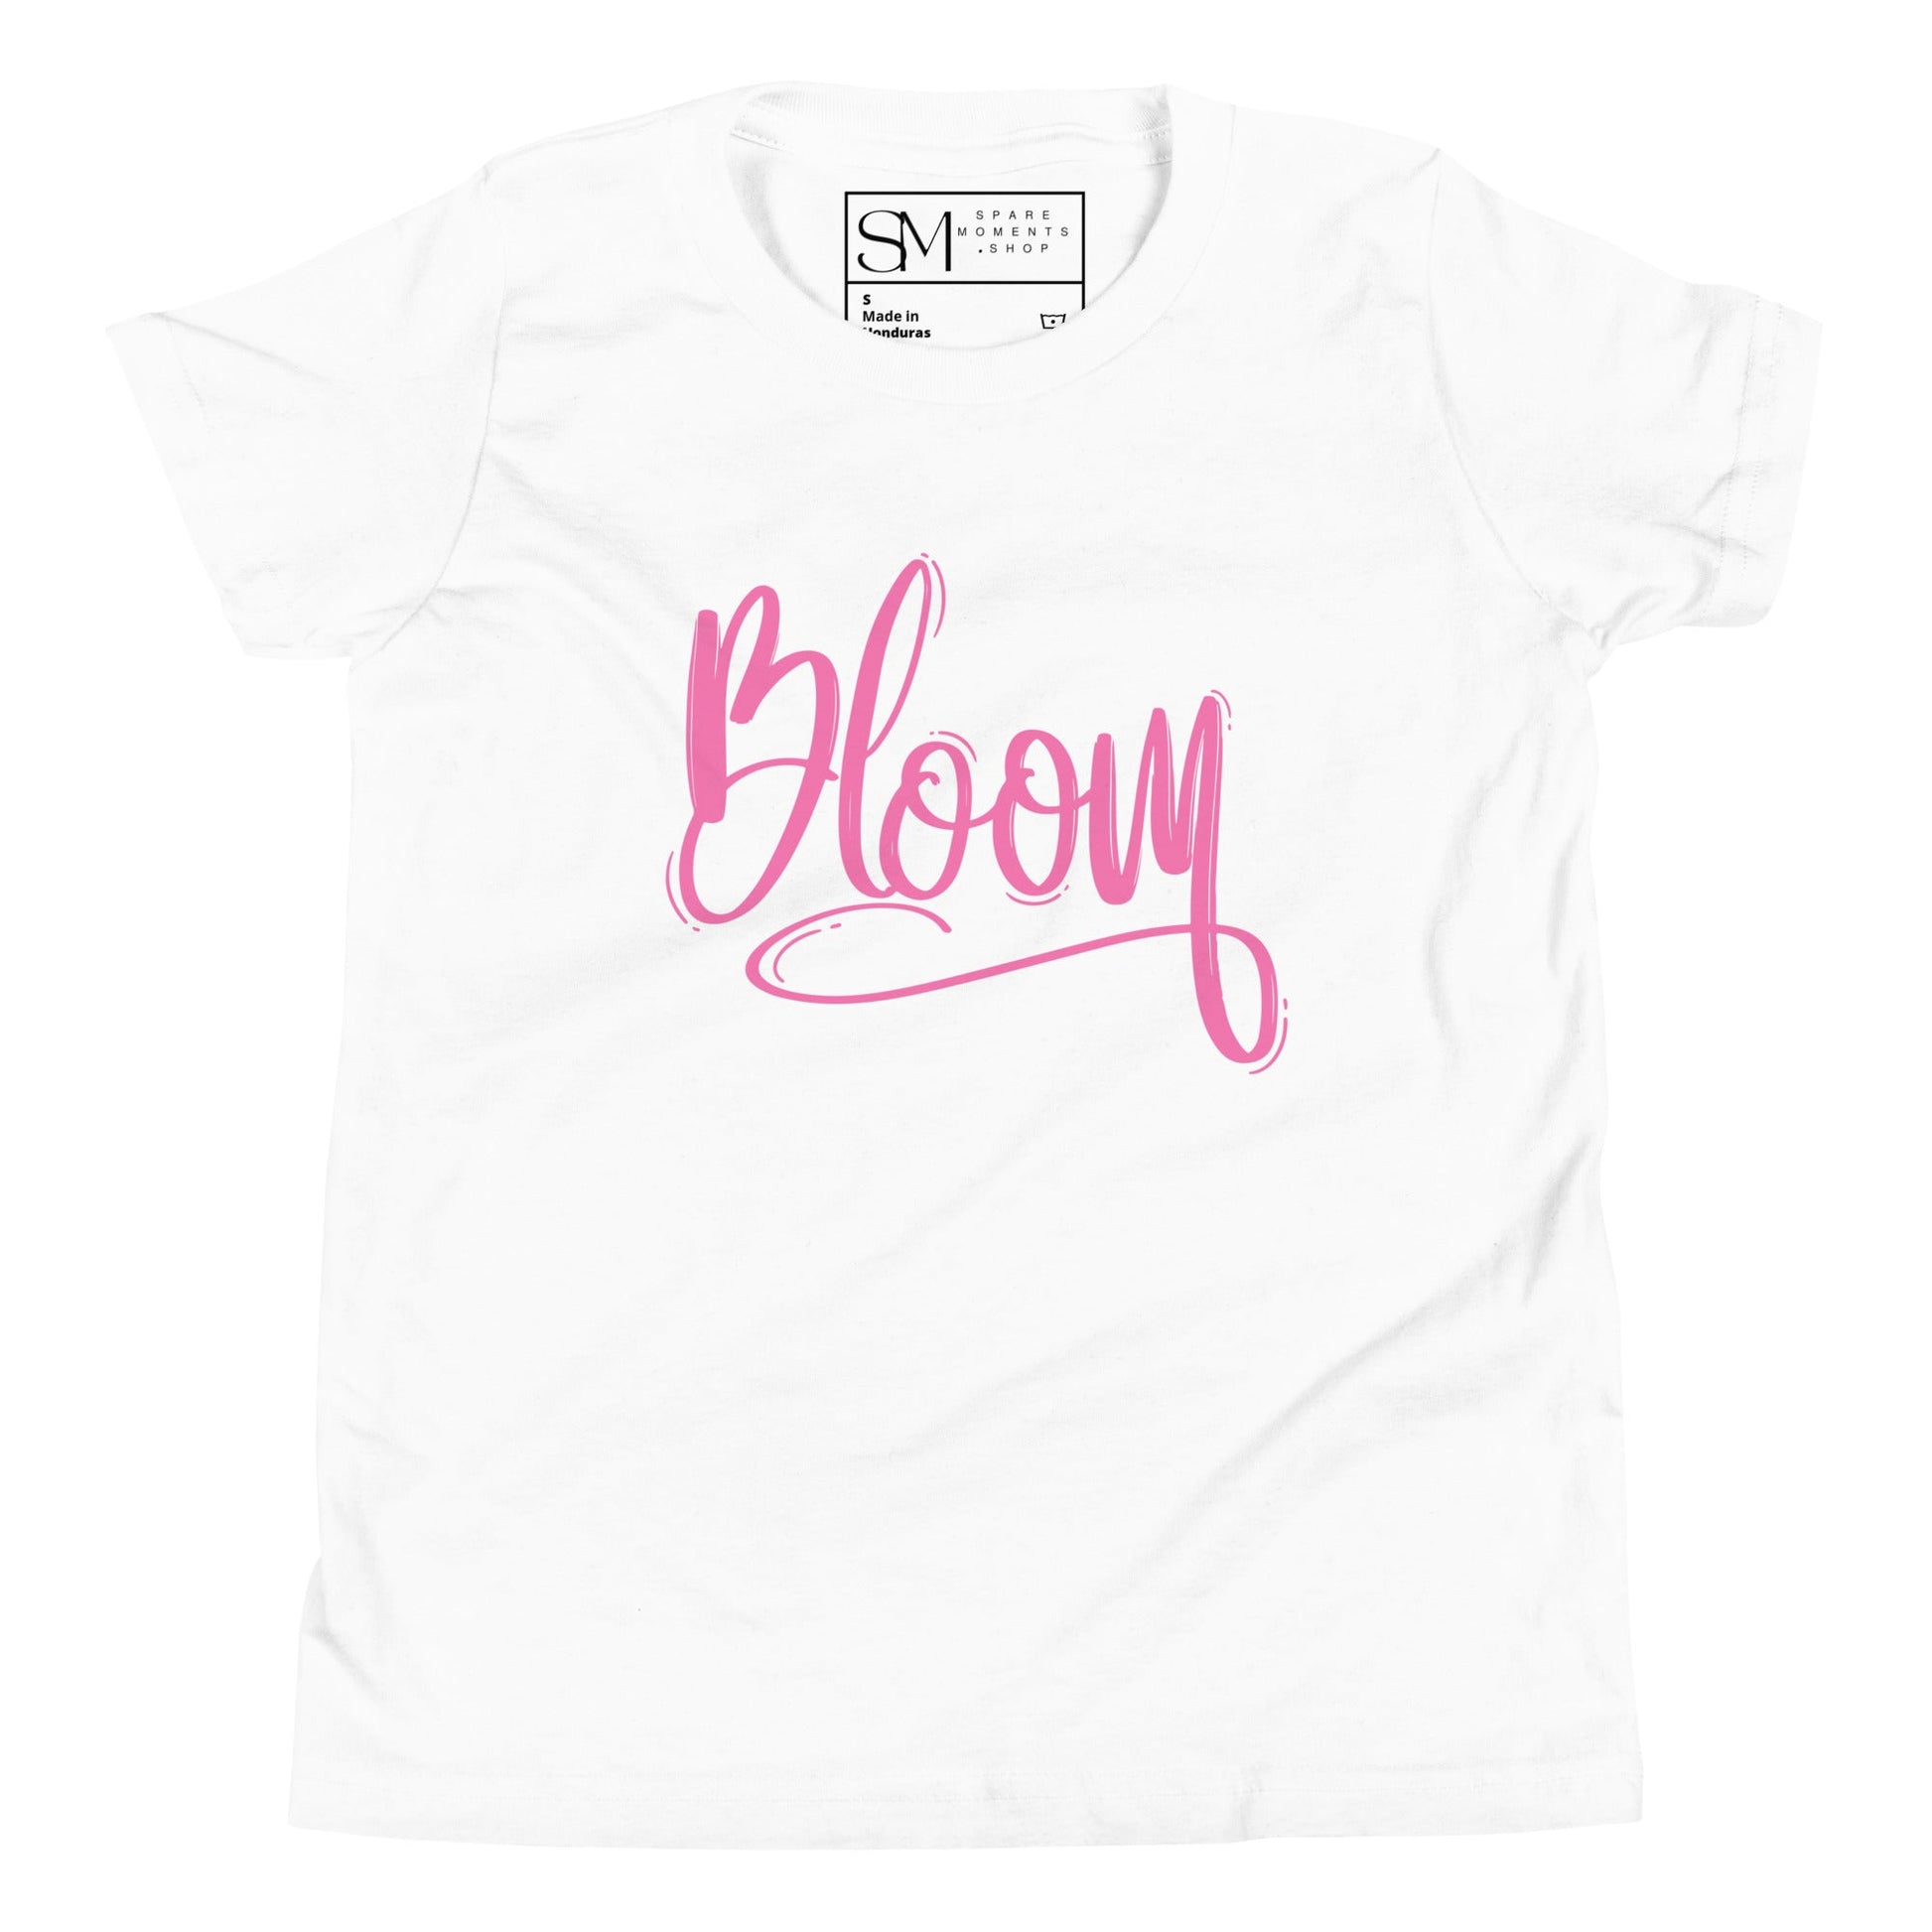 Bloom | Youth Short Sleeve T-Shirt